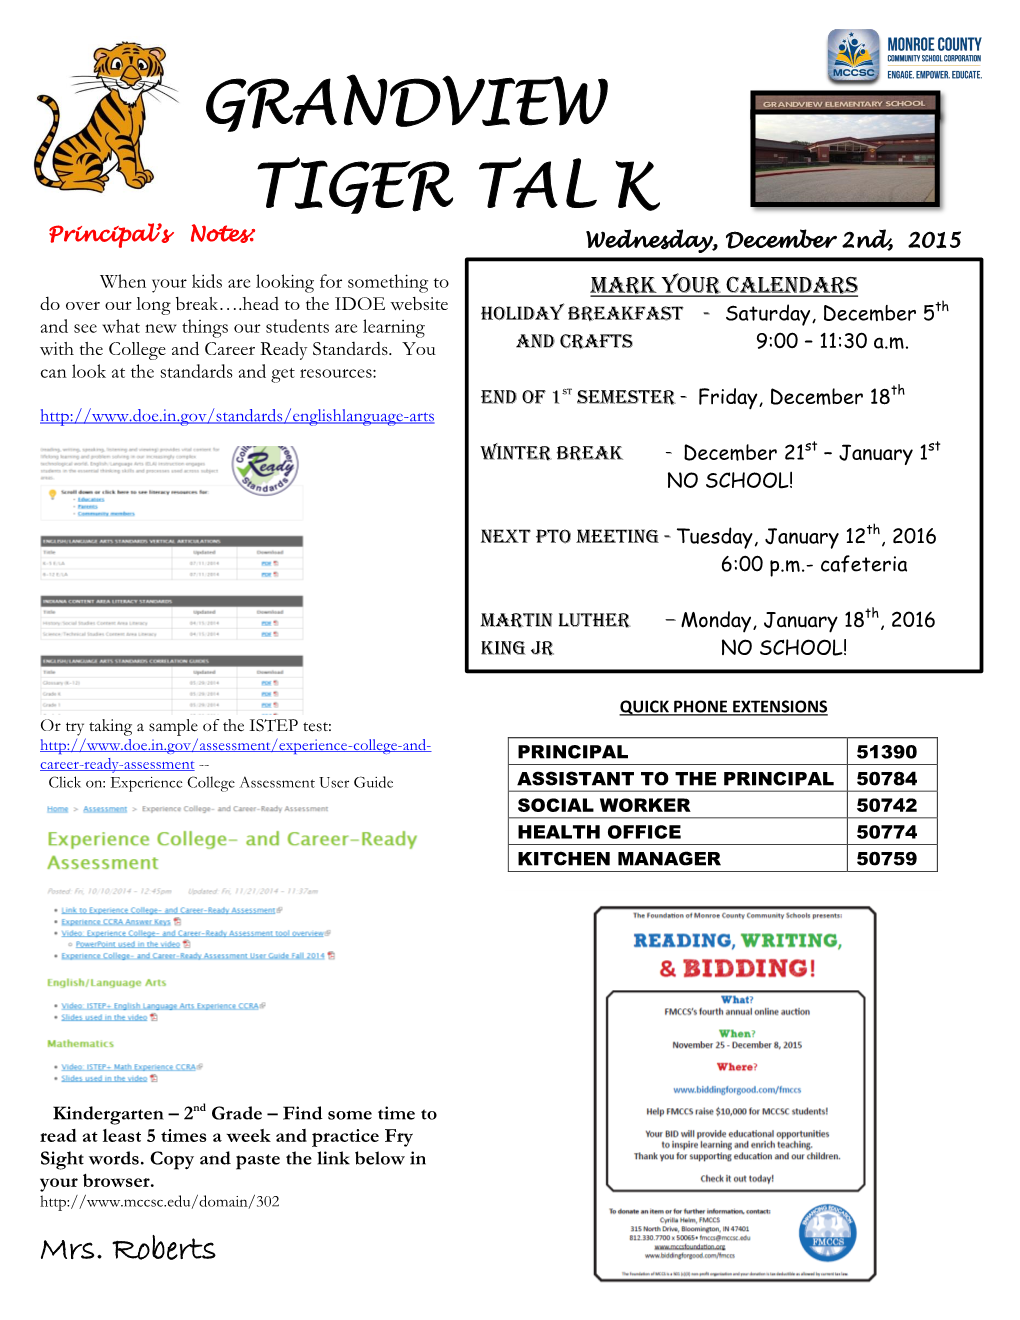 GRANDVIEW TIGER TAL K Principal’S Notes: Wednesday, December 2Nd, 2015